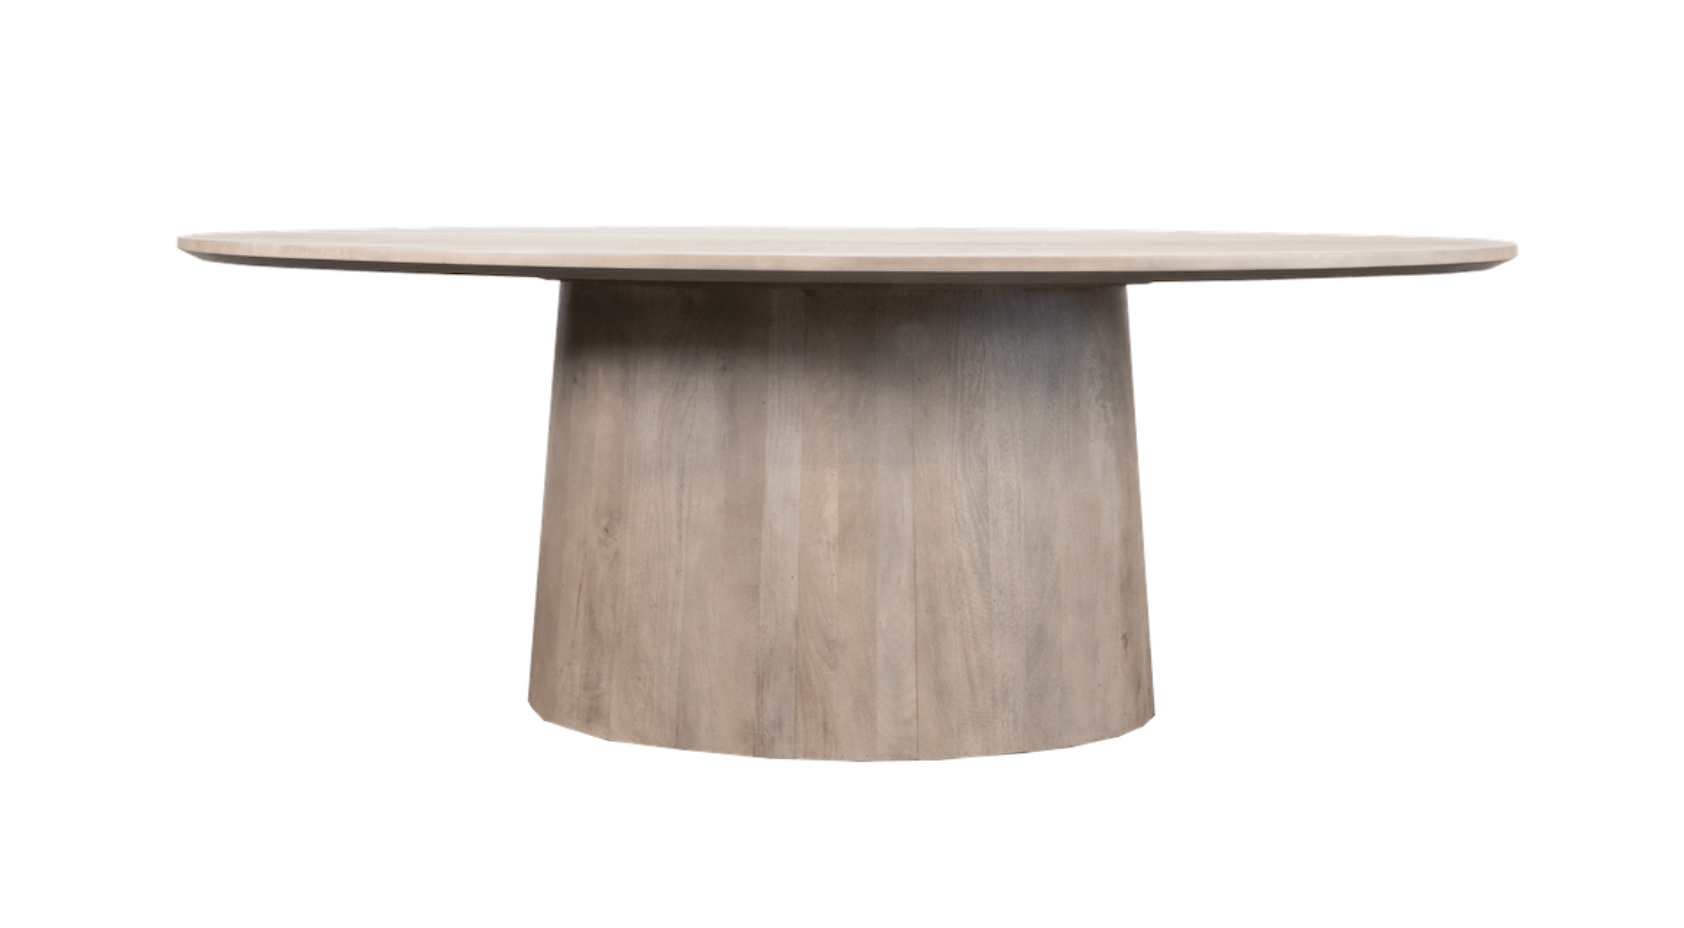 Designer Ash - Ancona Range Round Dining table 120cm - 160cm diameter - 4cm  thick top with central ash pedestal leg